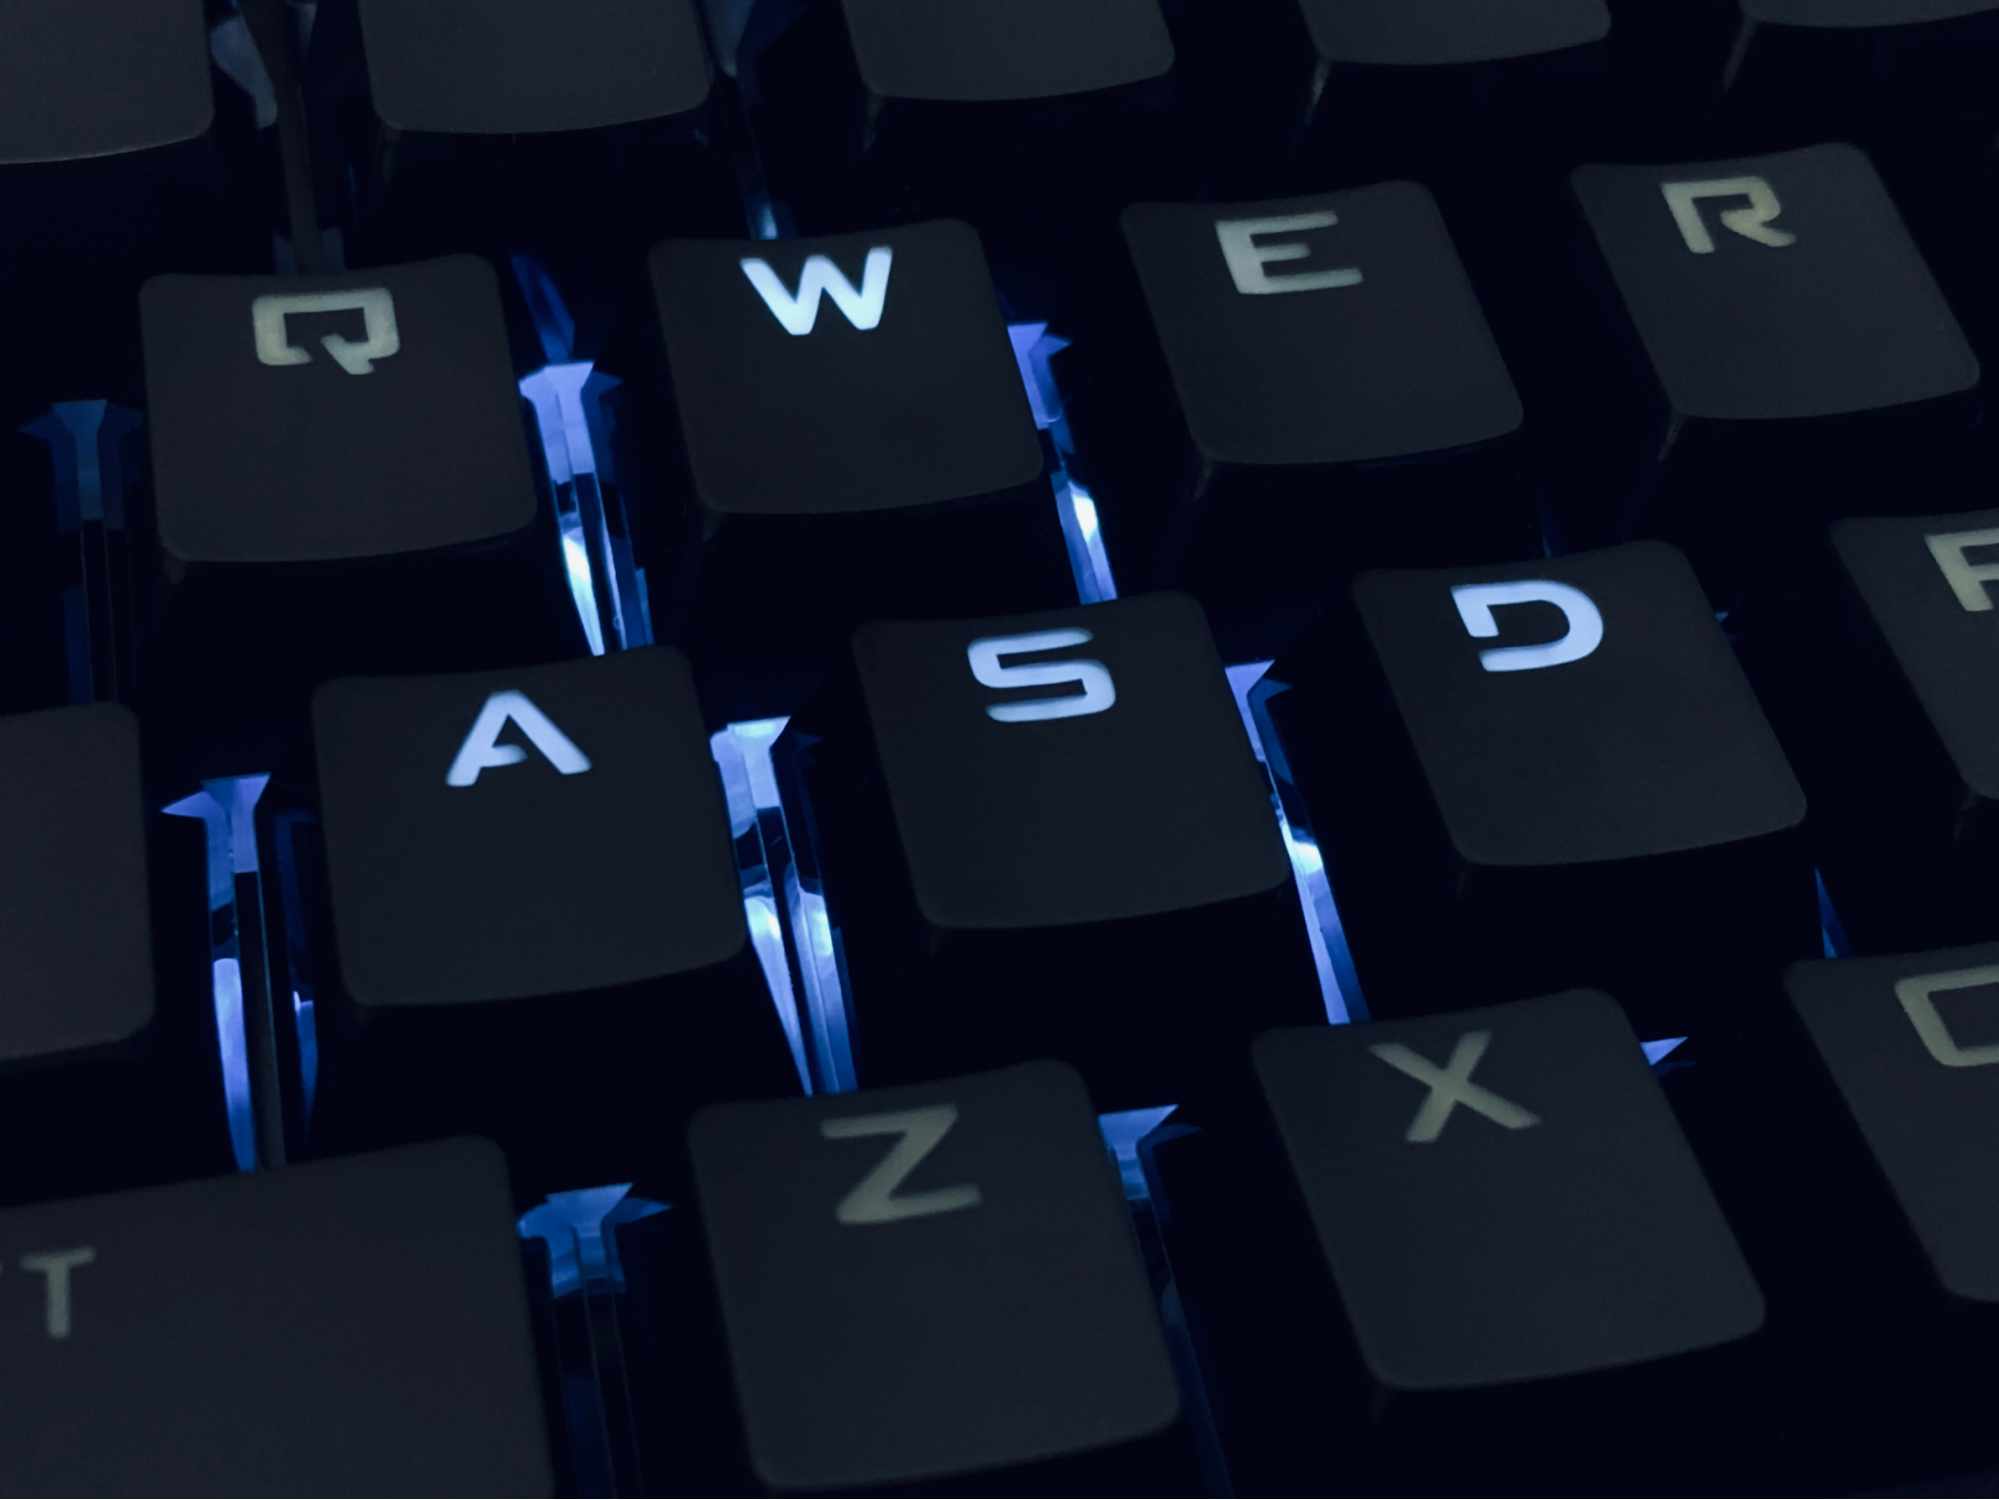 QWERTY keyboard in a blue backlight